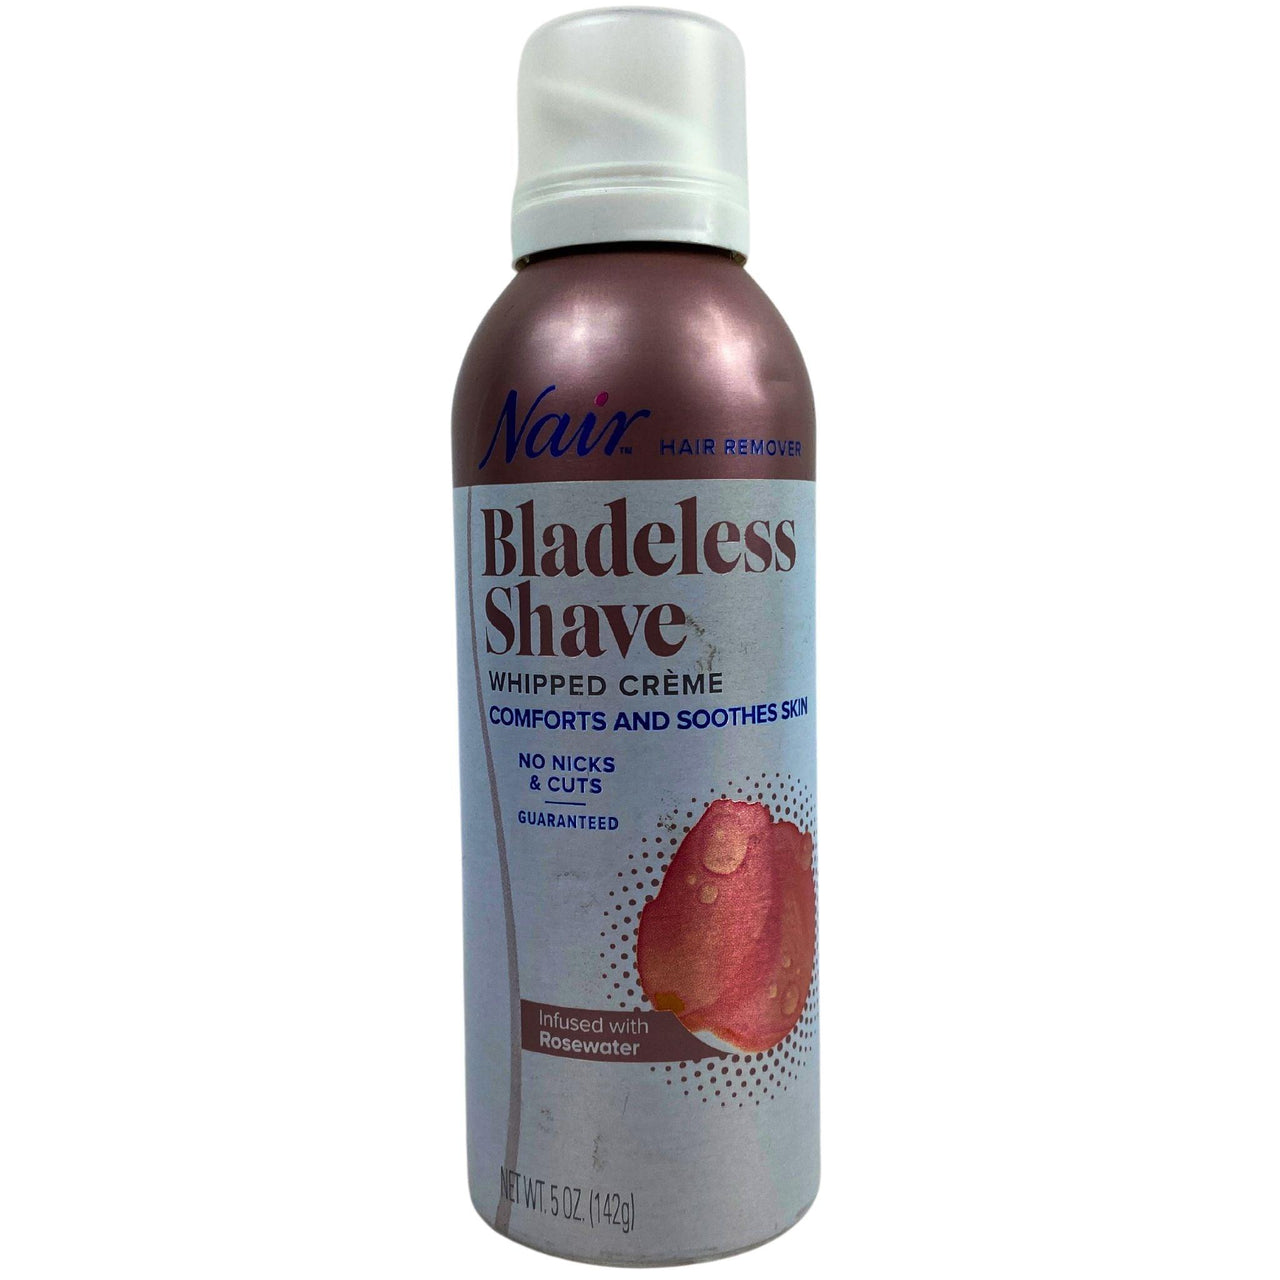 NAIR Hair Remover BLADELESS SHAVE Whipped Creme Comforts & Soothes Skin No Nicks & Cuts Guaranteed 5oz (30 Pcs Lot) - Discount Wholesalers Inc